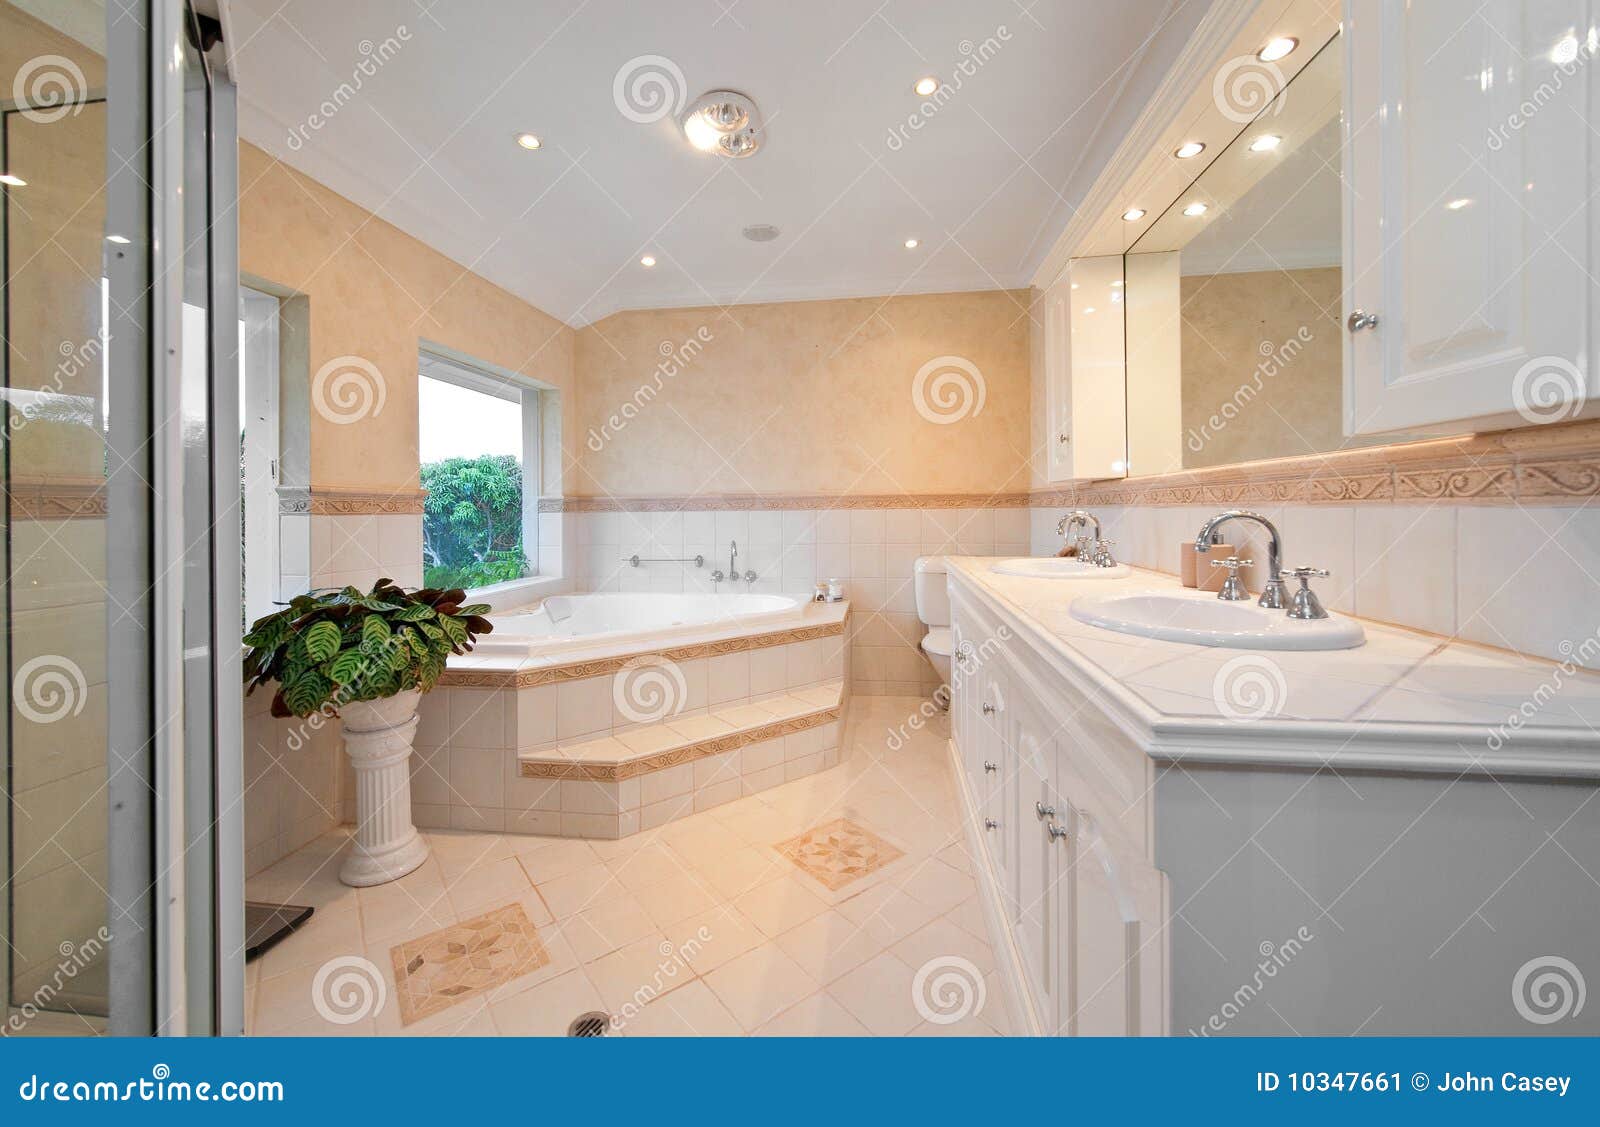 Bathroom with sauna stock image. Image of light, home - 10347661